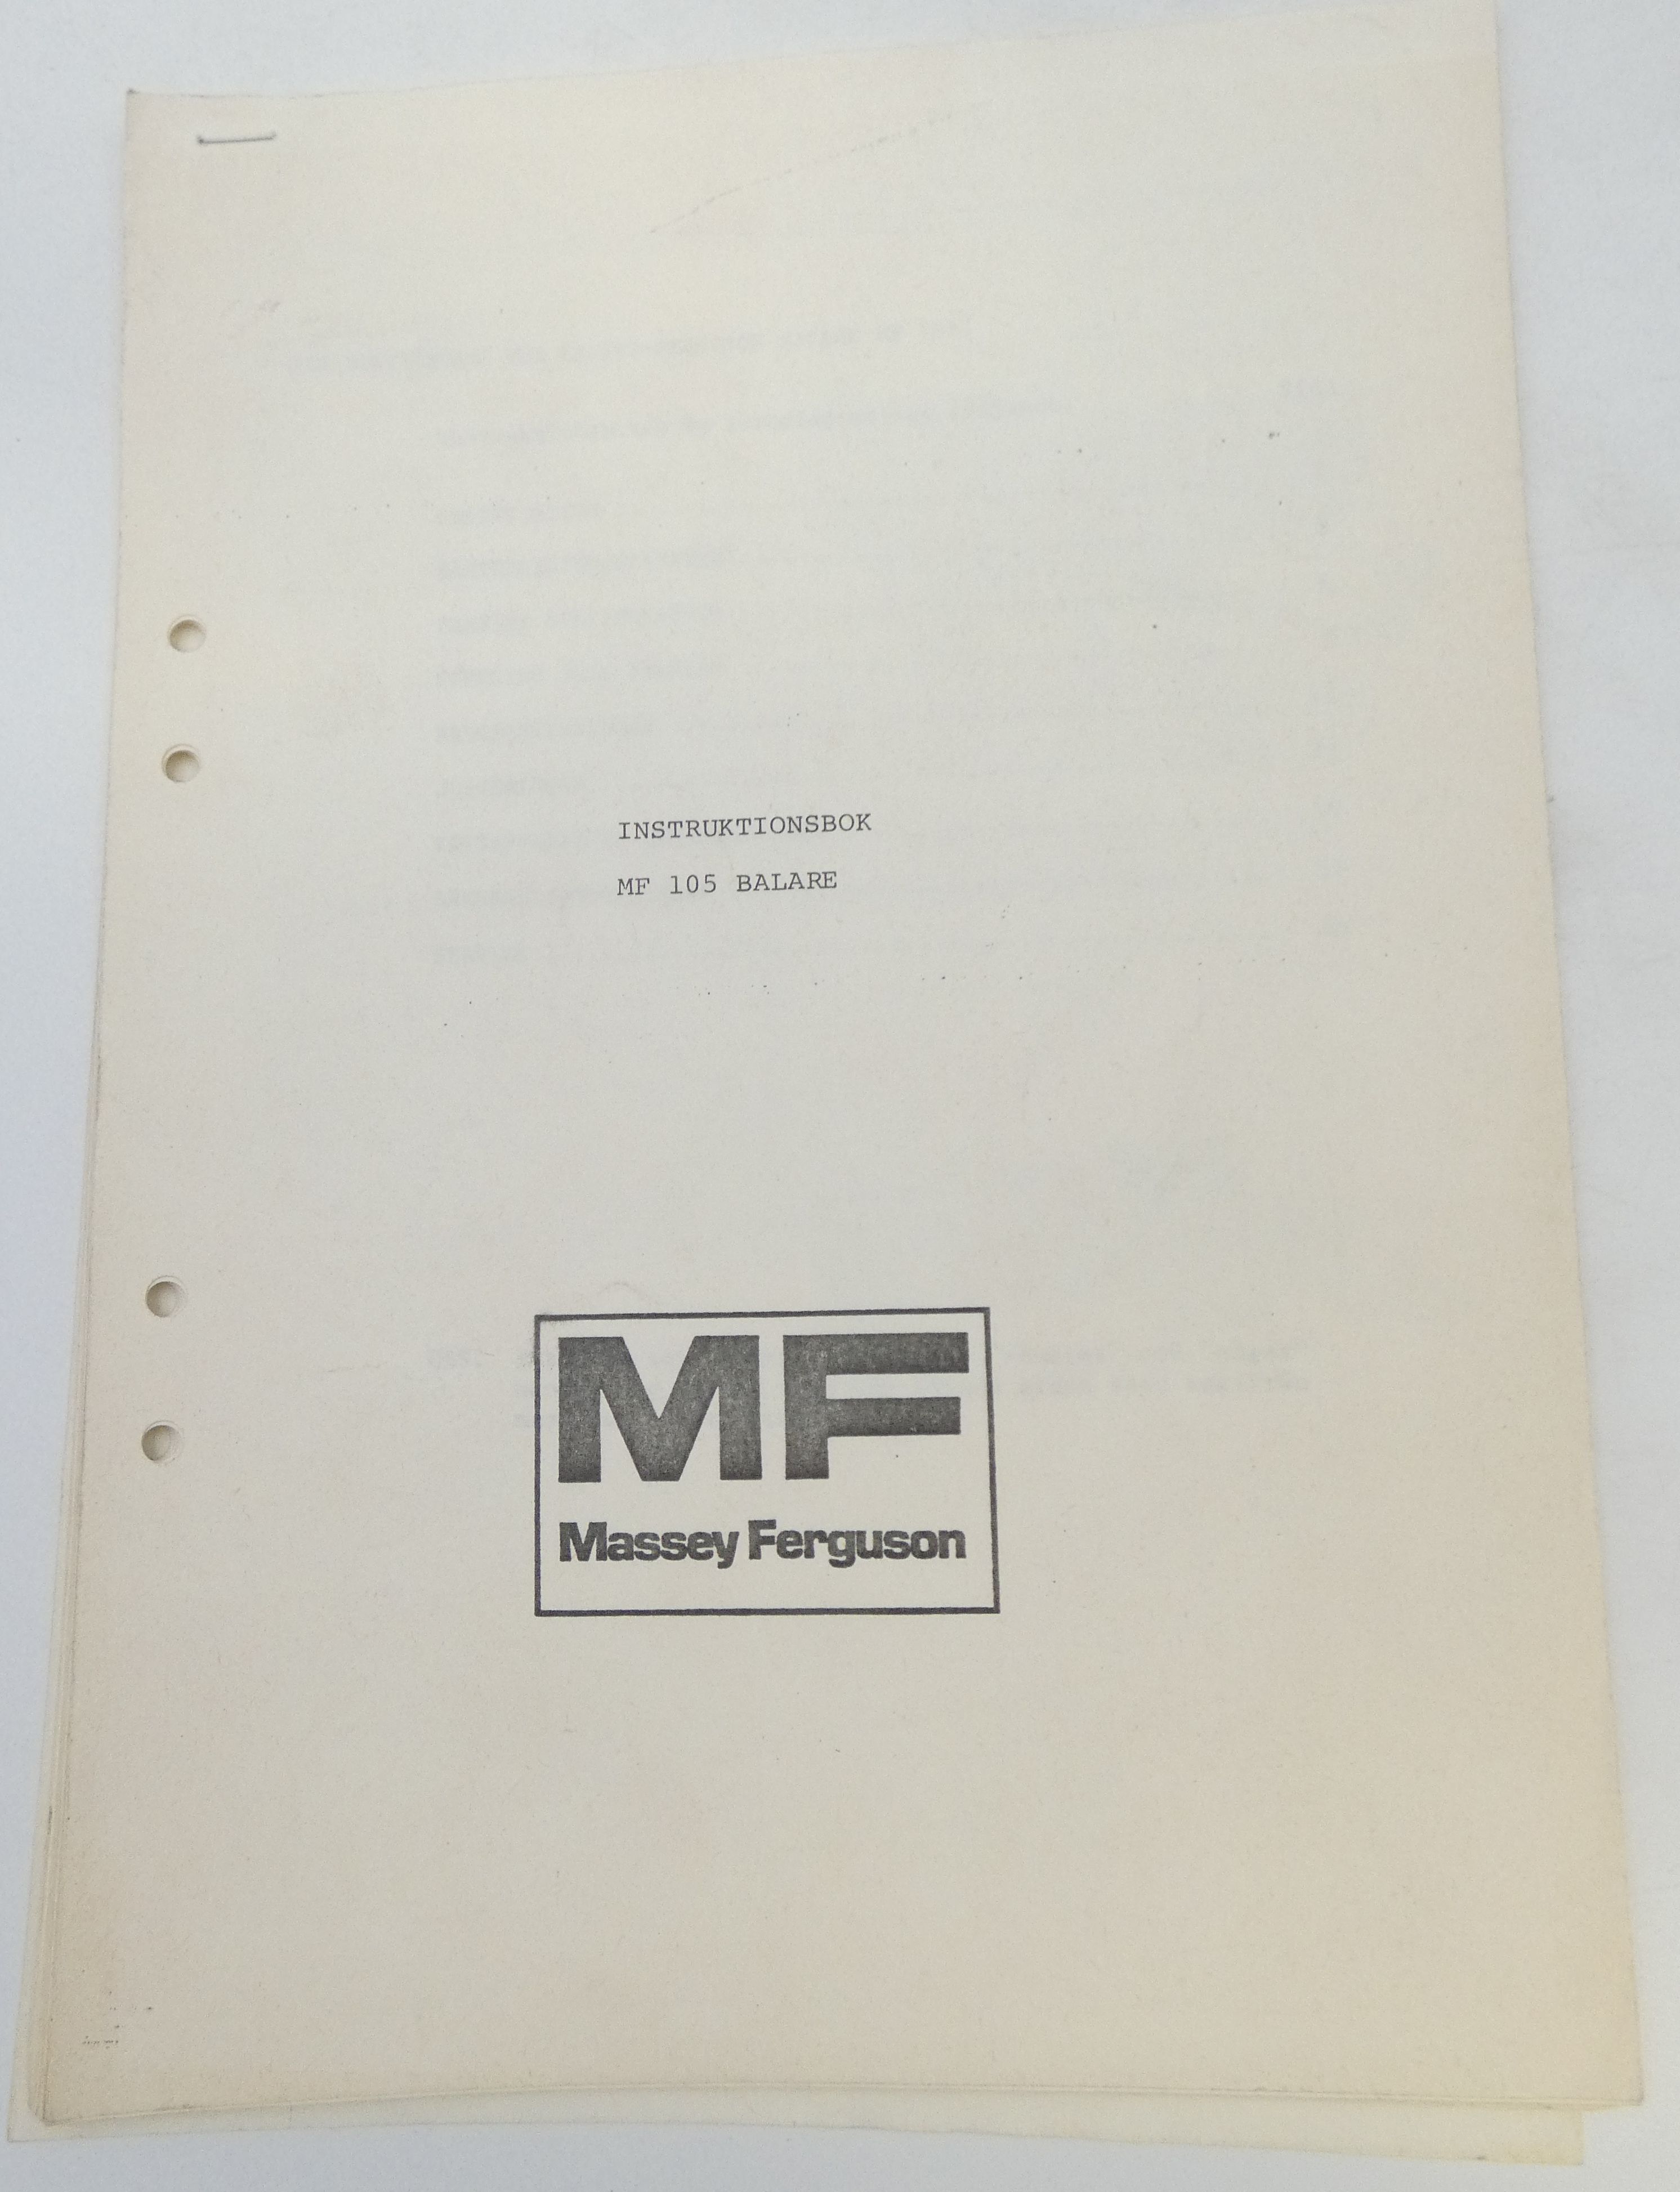 Massey-Ferguson MF105 balare instruktionsbok